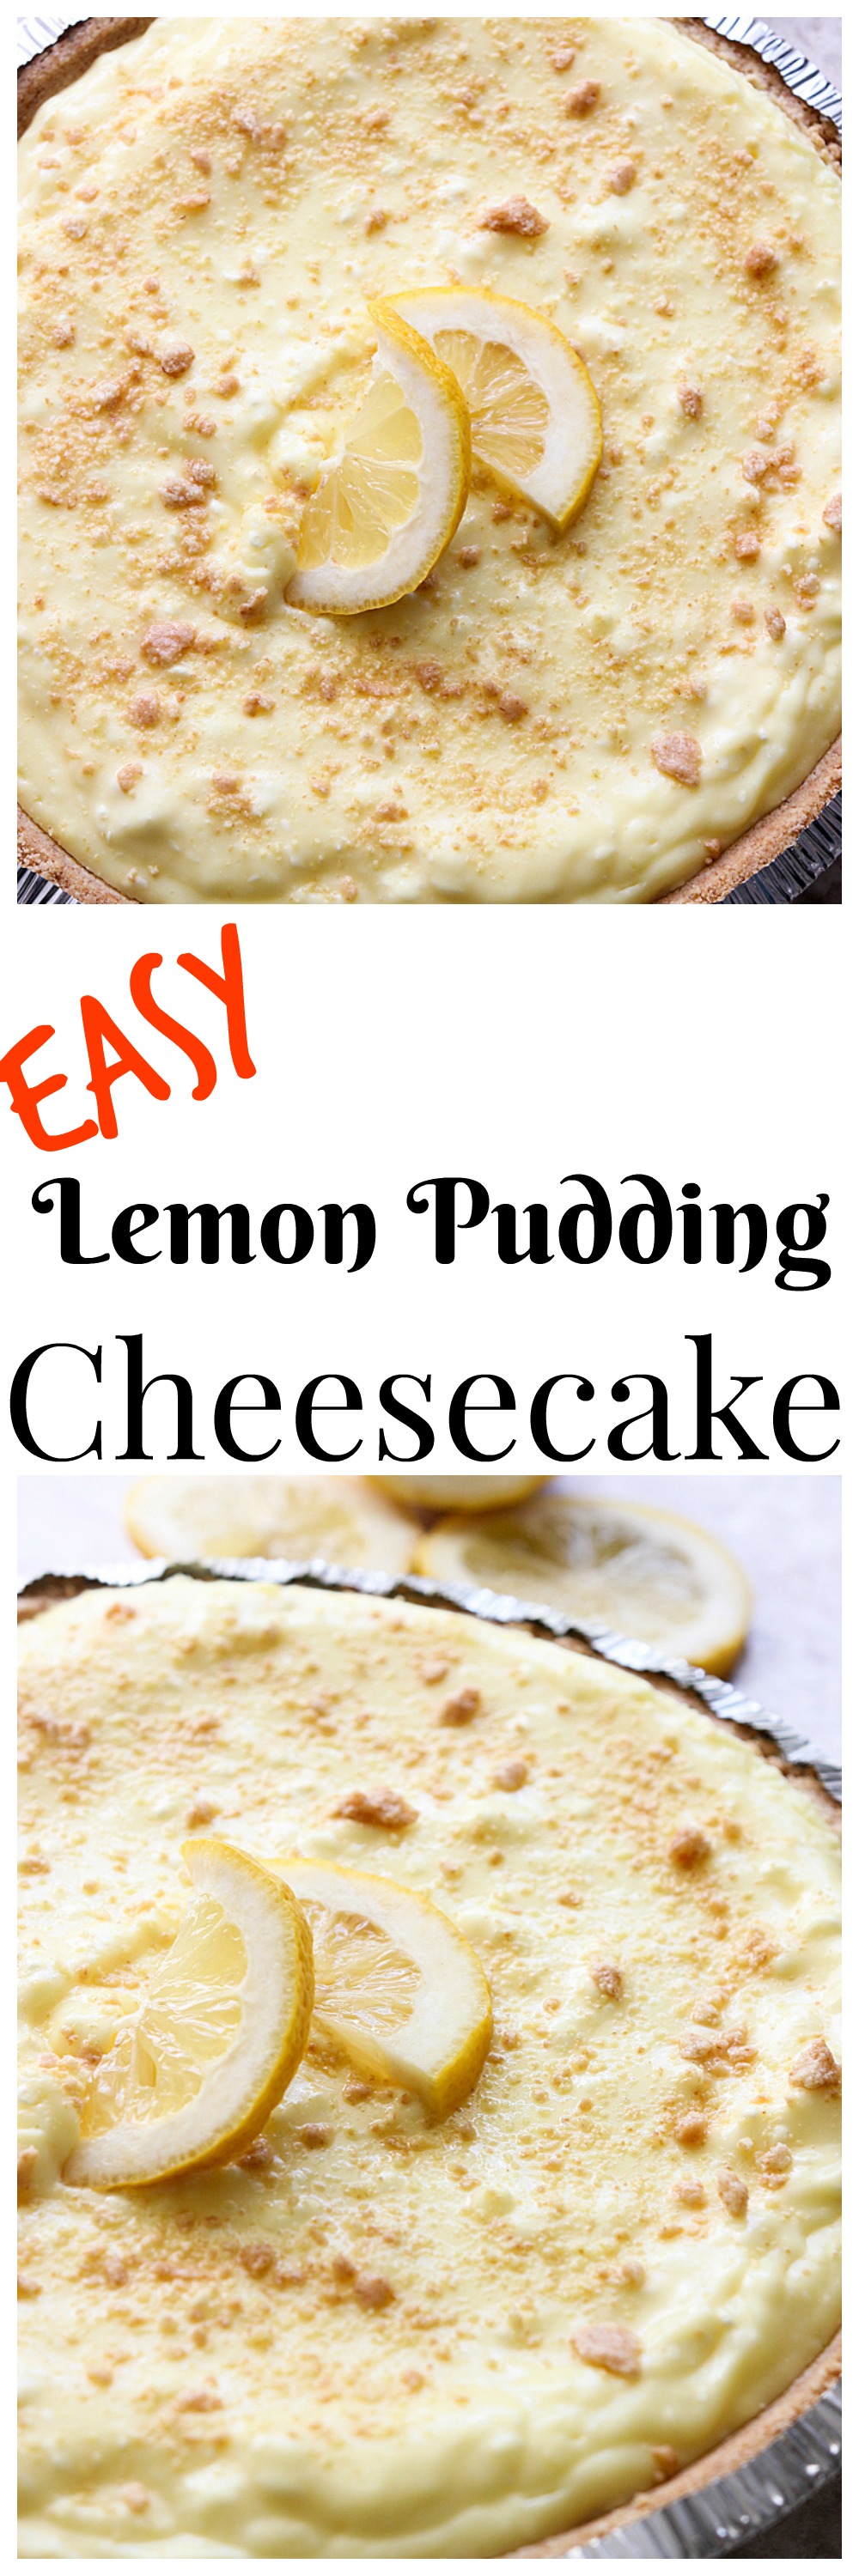 Easy Lemon Pudding Cheesecake